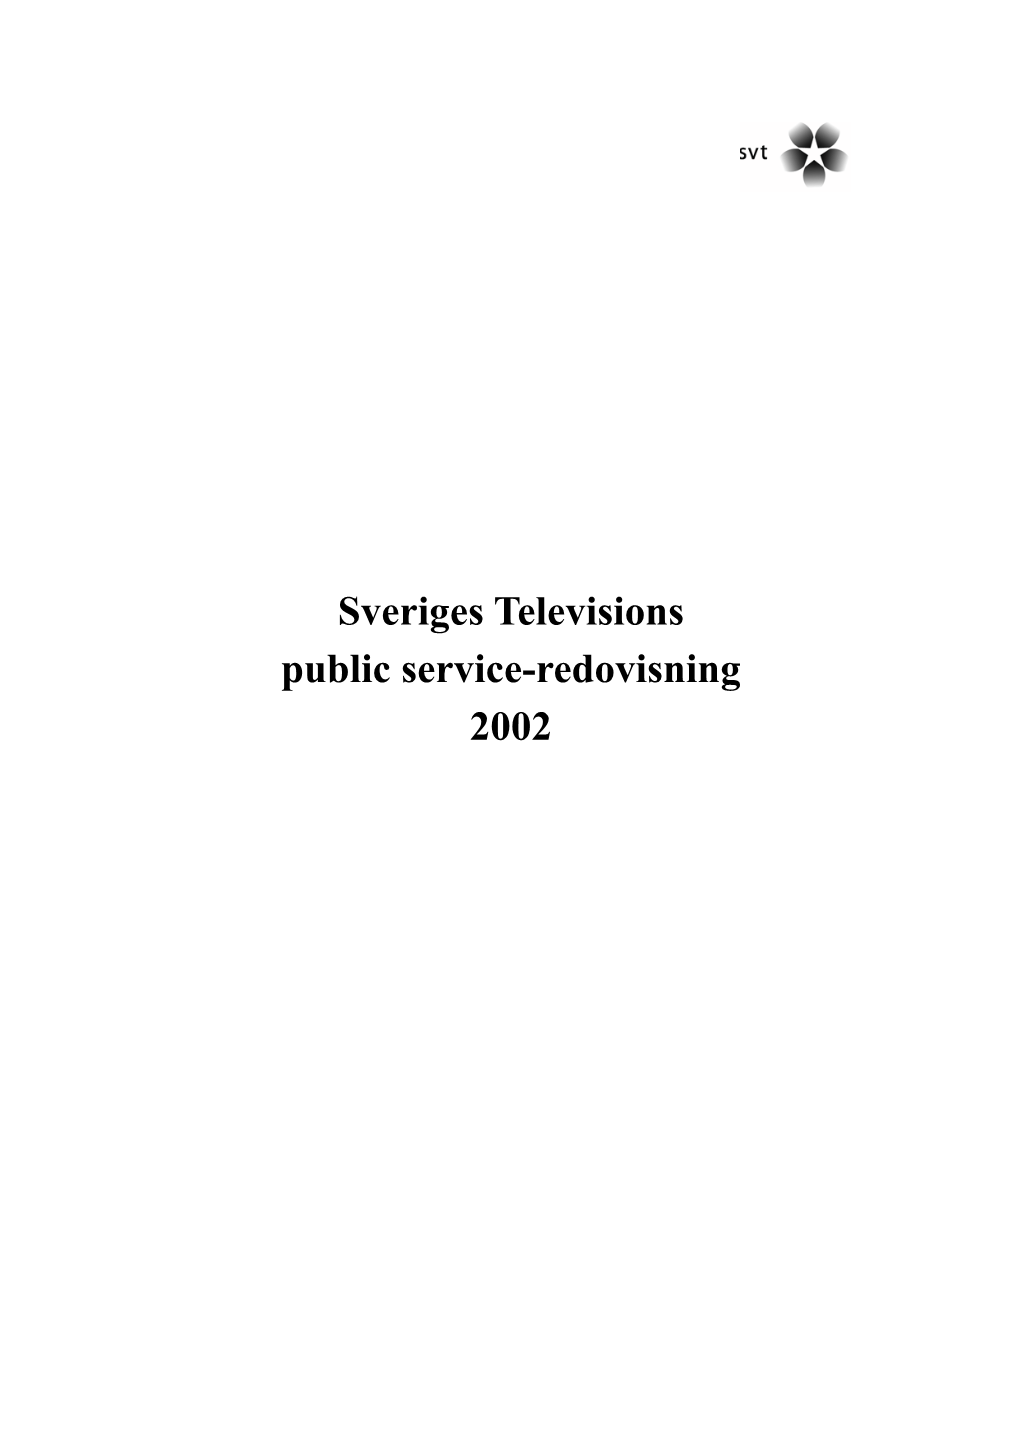 Sveriges Televisions Public Service-Redovisning 2002